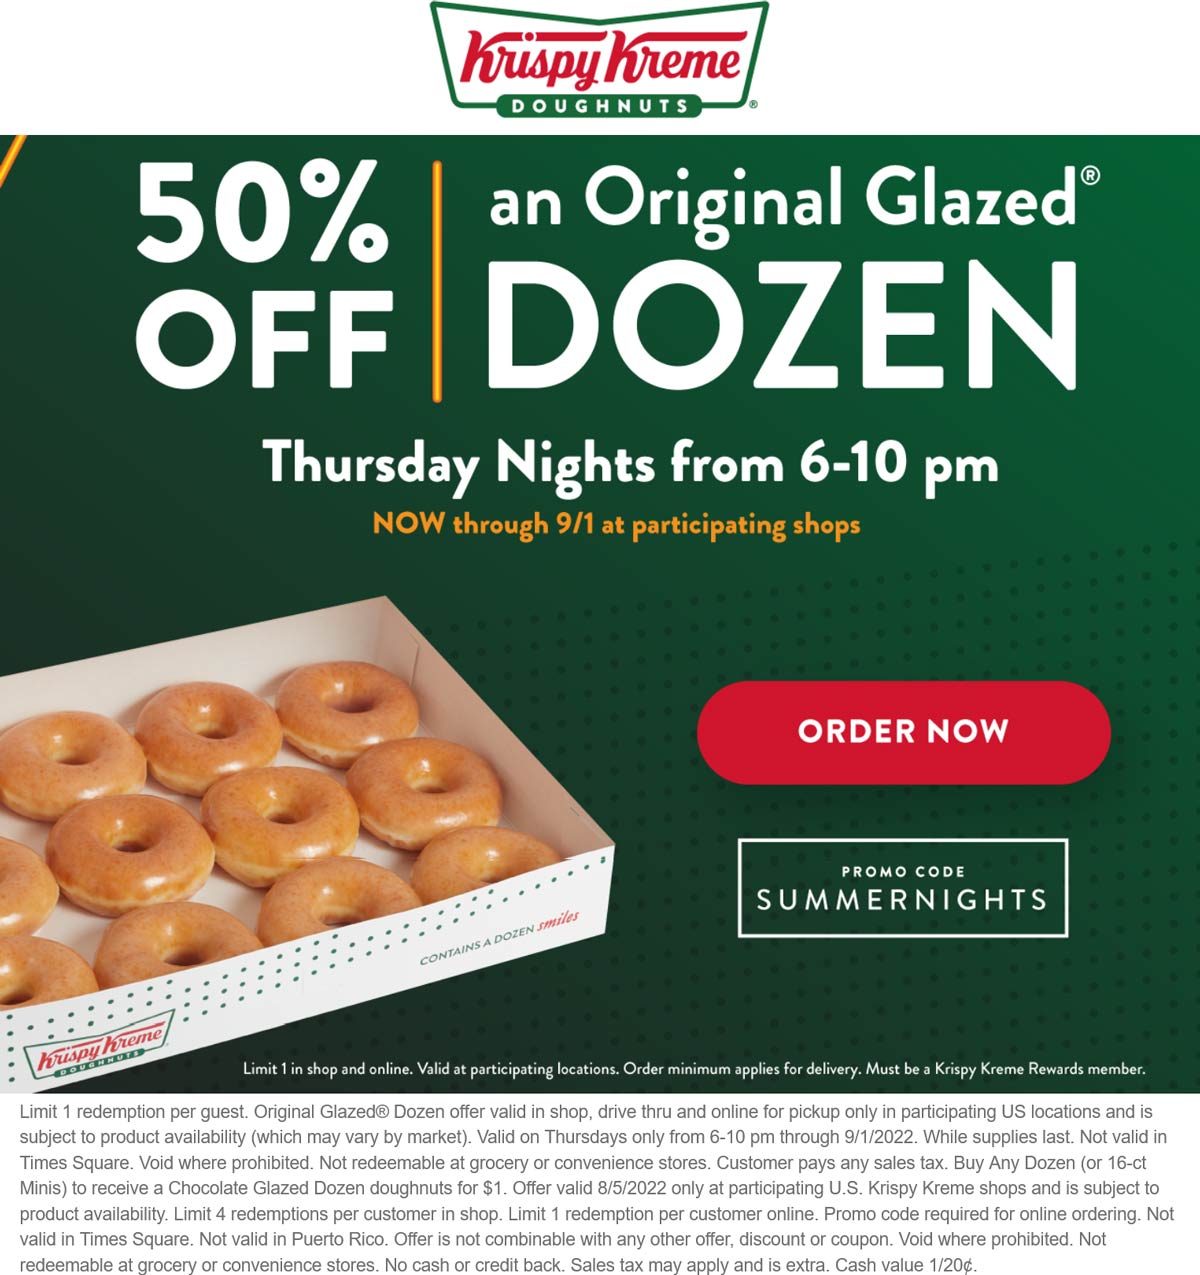 Krispy Kreme restaurants Coupon  50% off dozen doughnuts 6-10p Thursdays at Krispy Kreme #krispykreme 